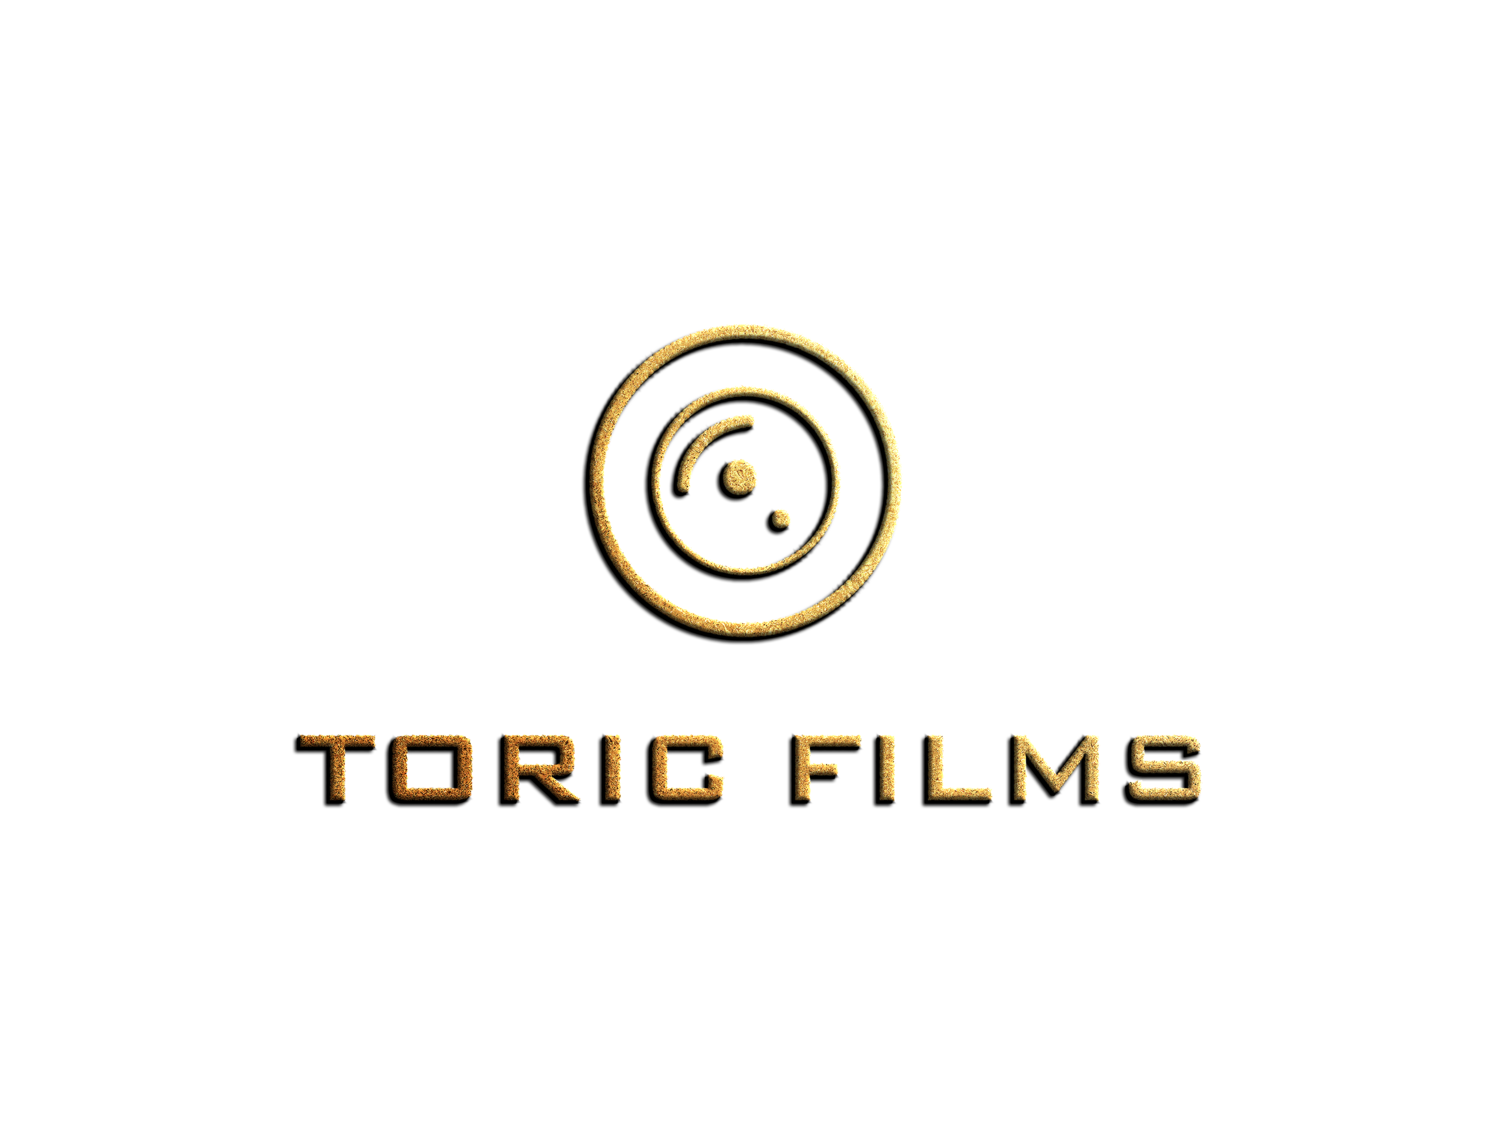 Toric Films